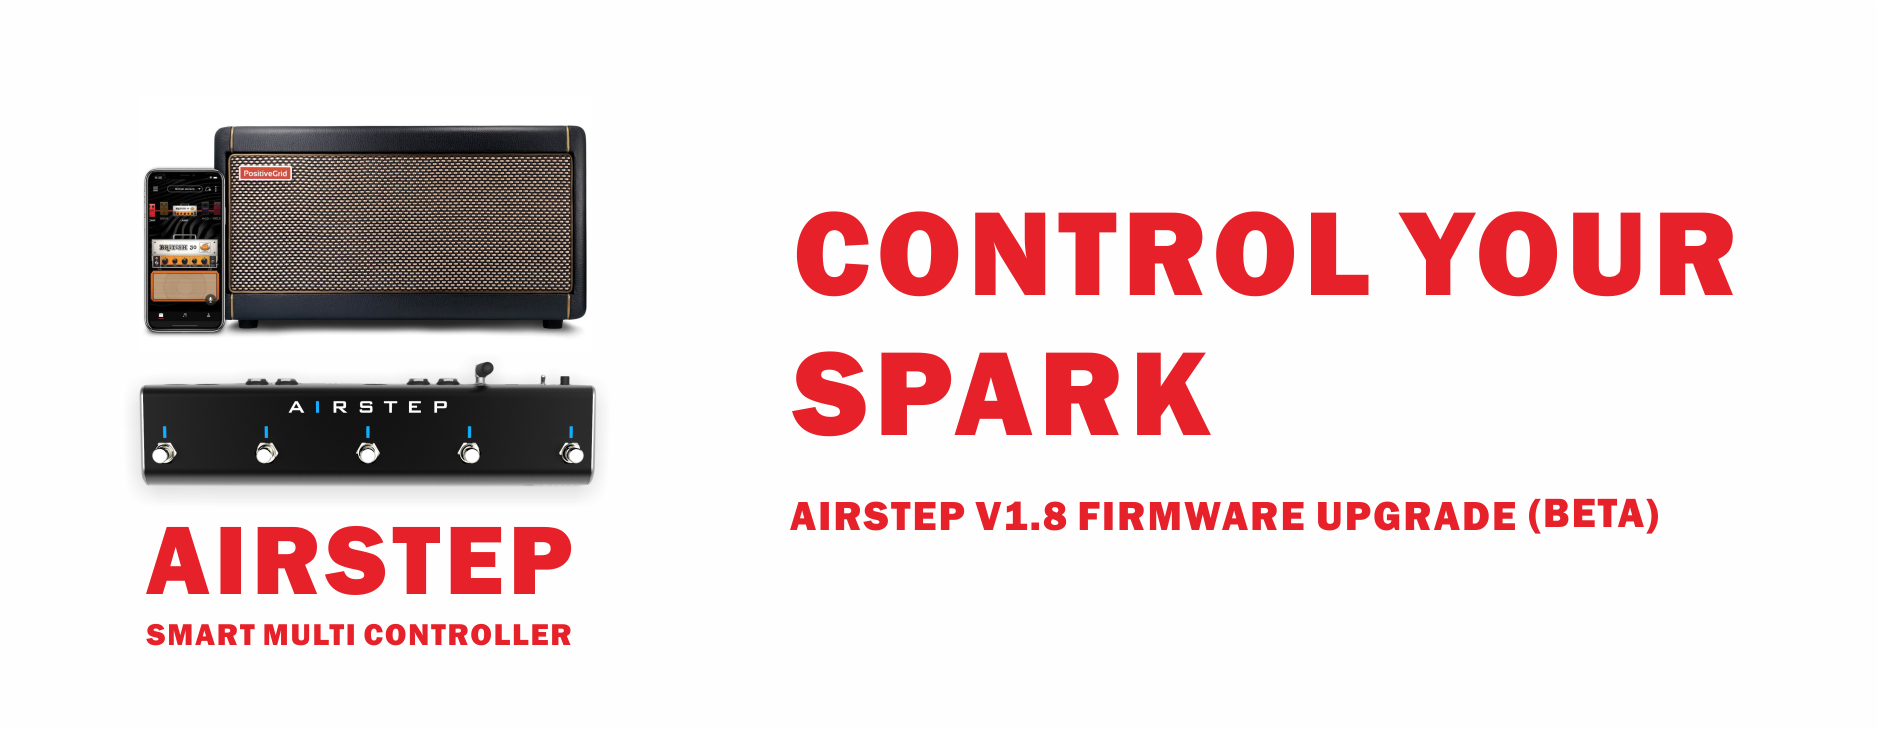 Control your Spark！AIRSTEP V1.8 FIRMWARE UPGRADE(BETA) Test invitation